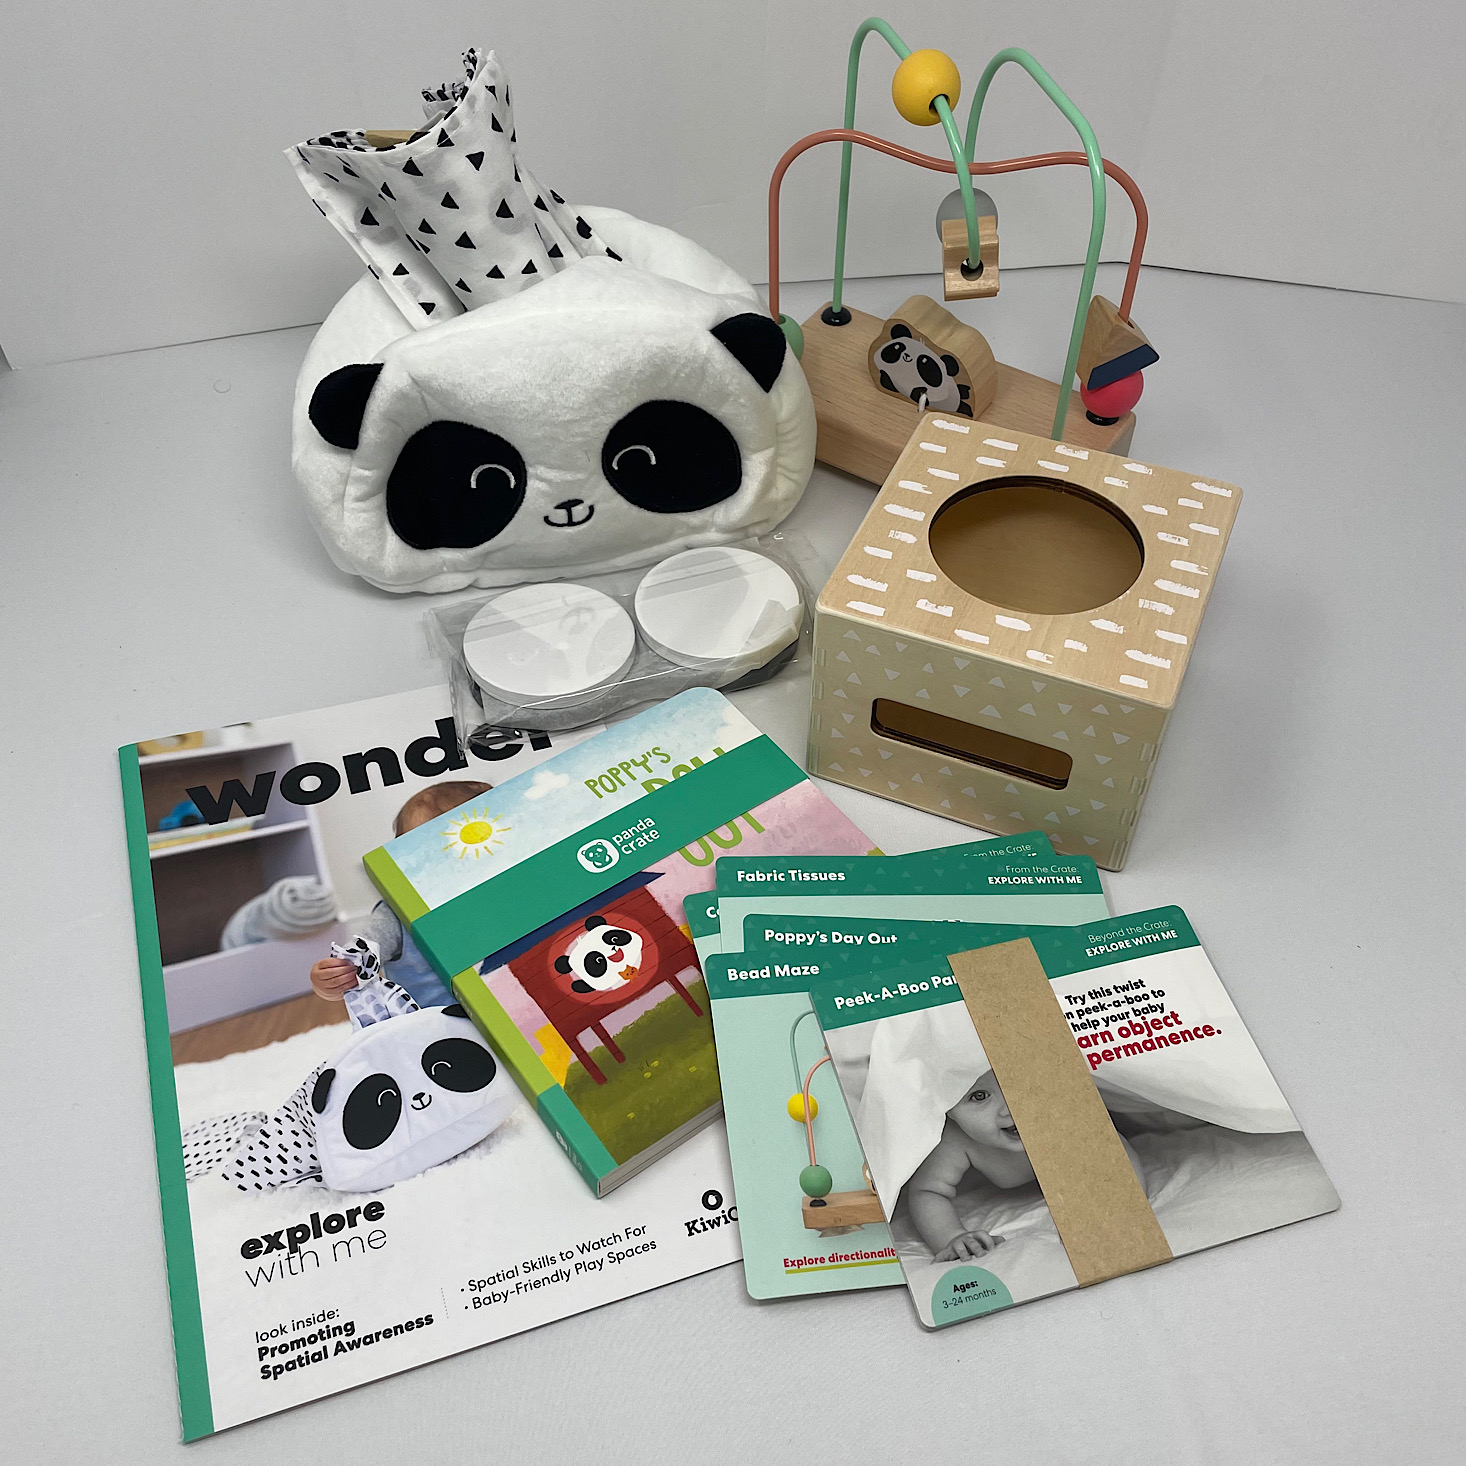 KiwiCo Panda Crate “Explore with Me” Review